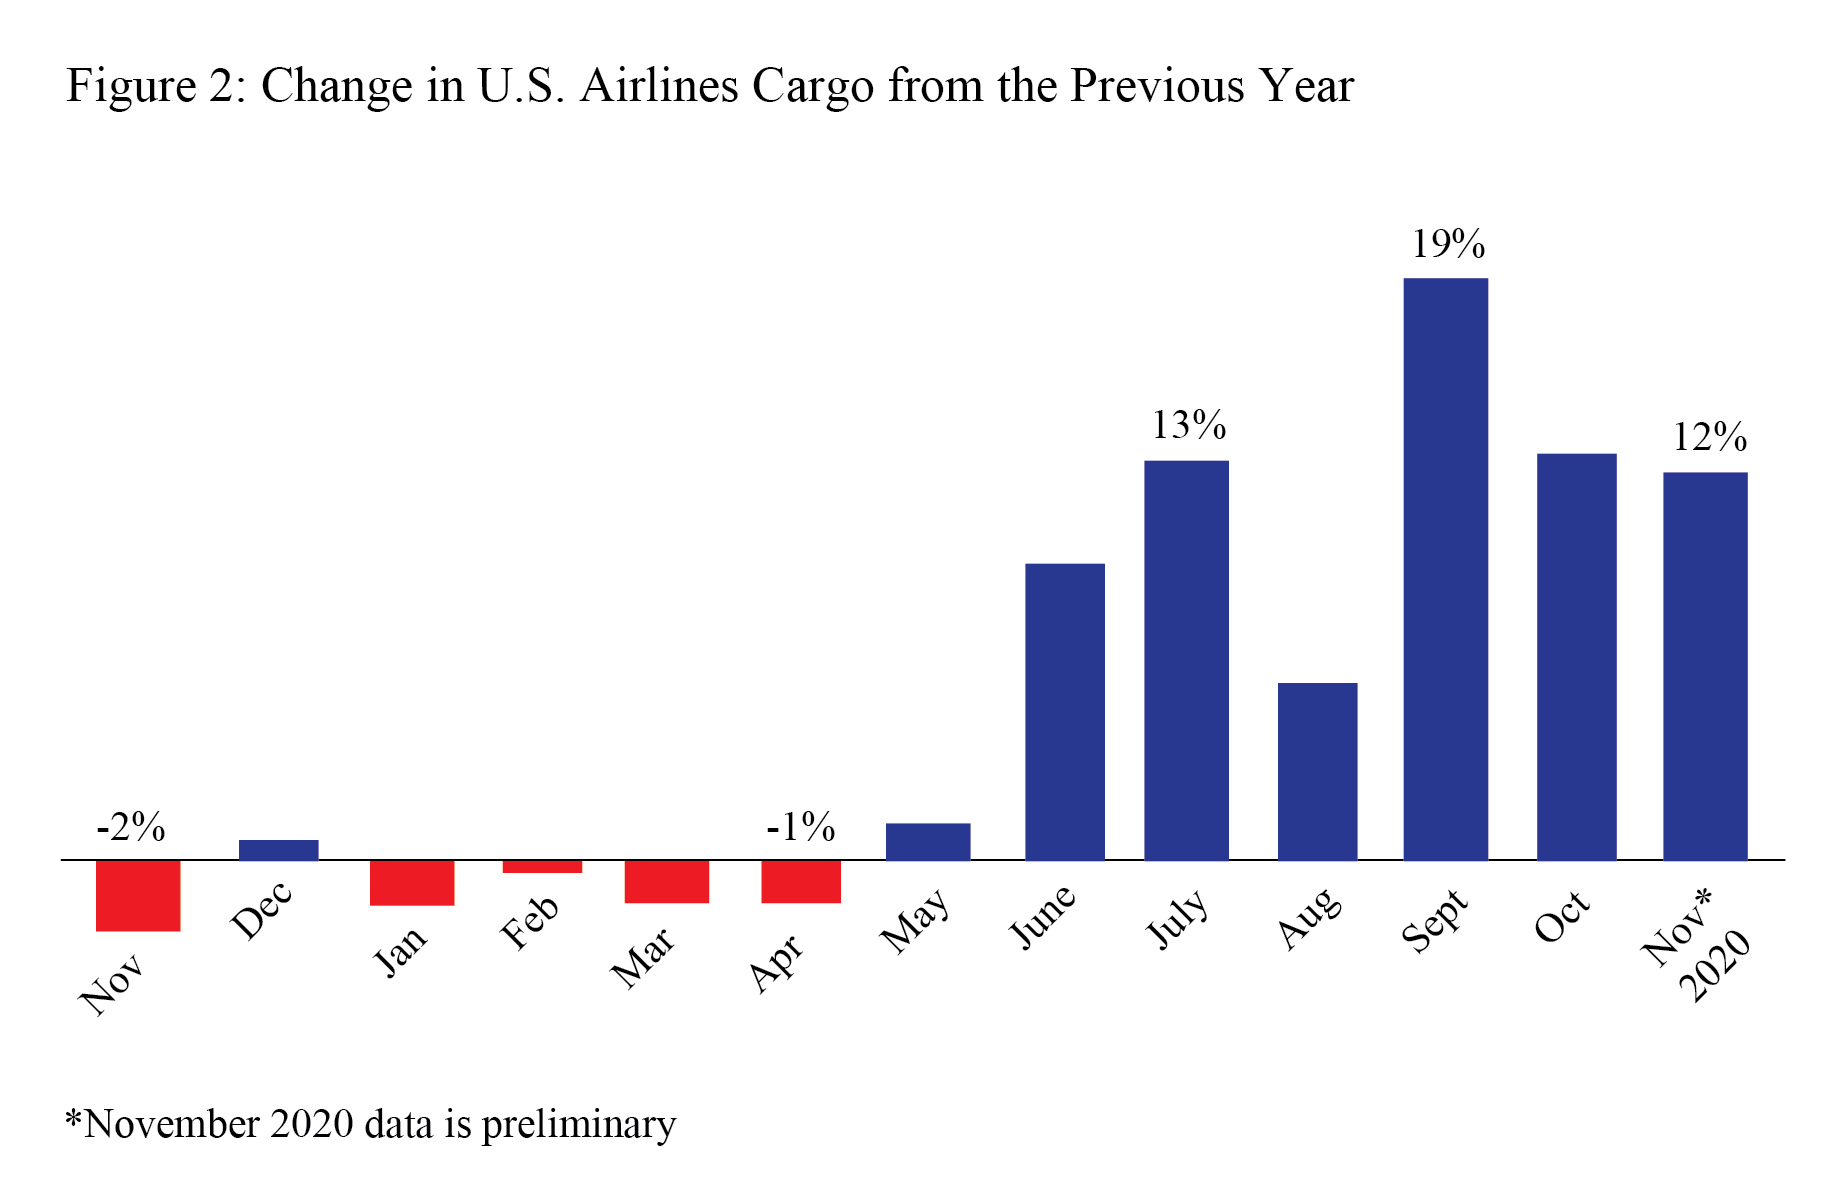 U.S. Airlines Cargo, november 2020 (Preliminary)